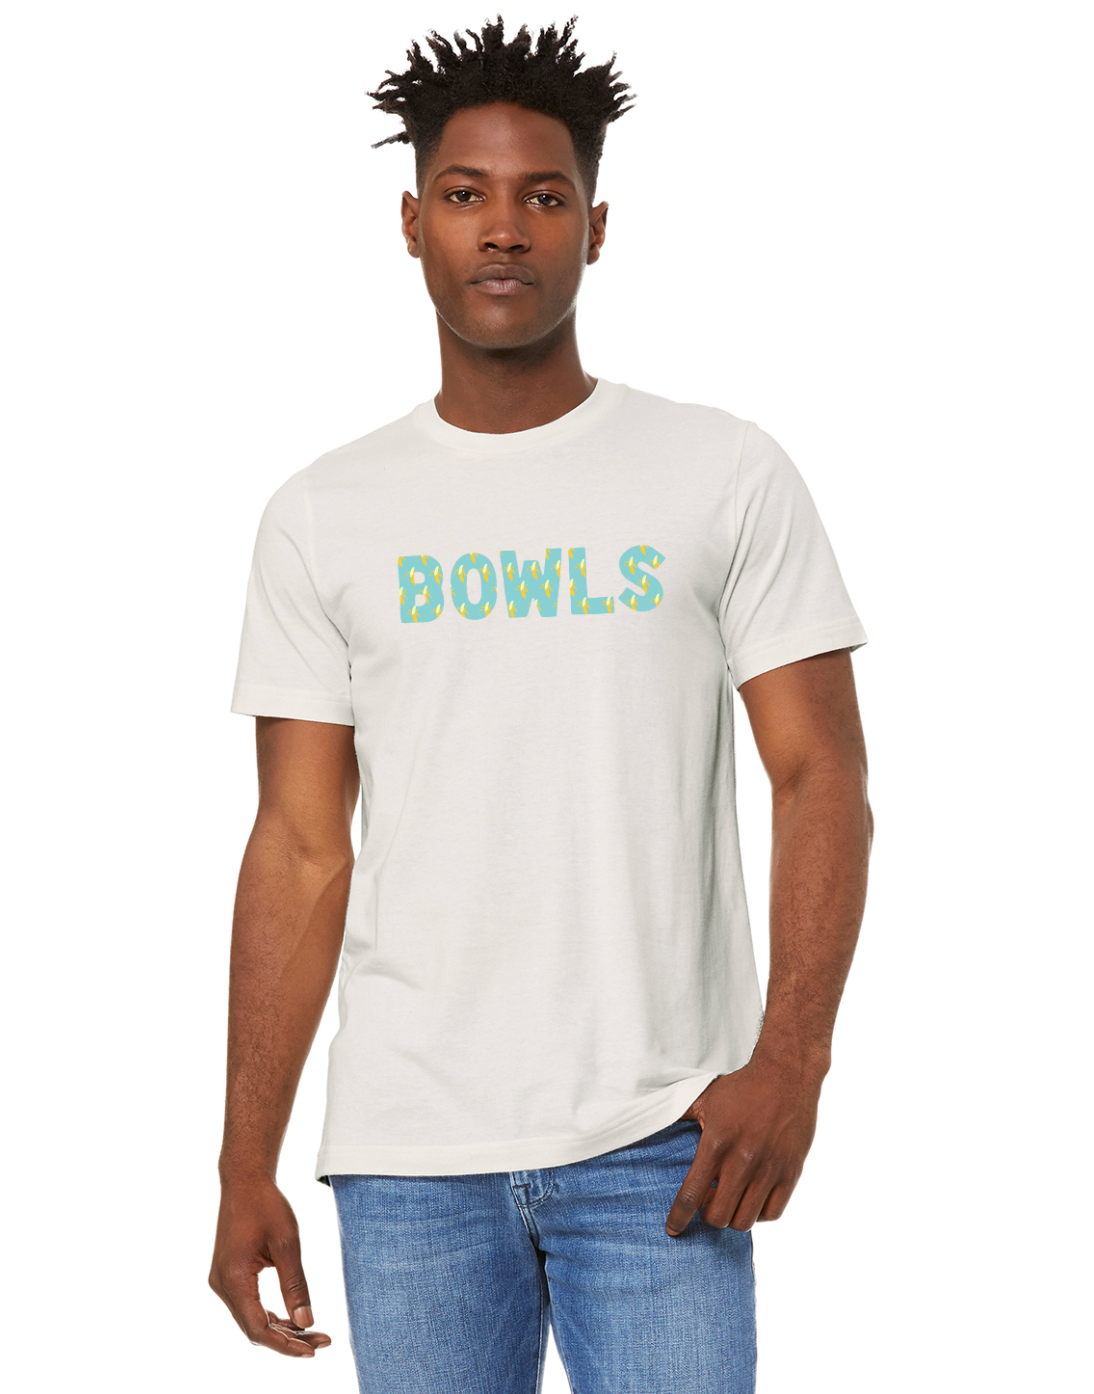 BANANA BOWLS shirt - blendersandbowls